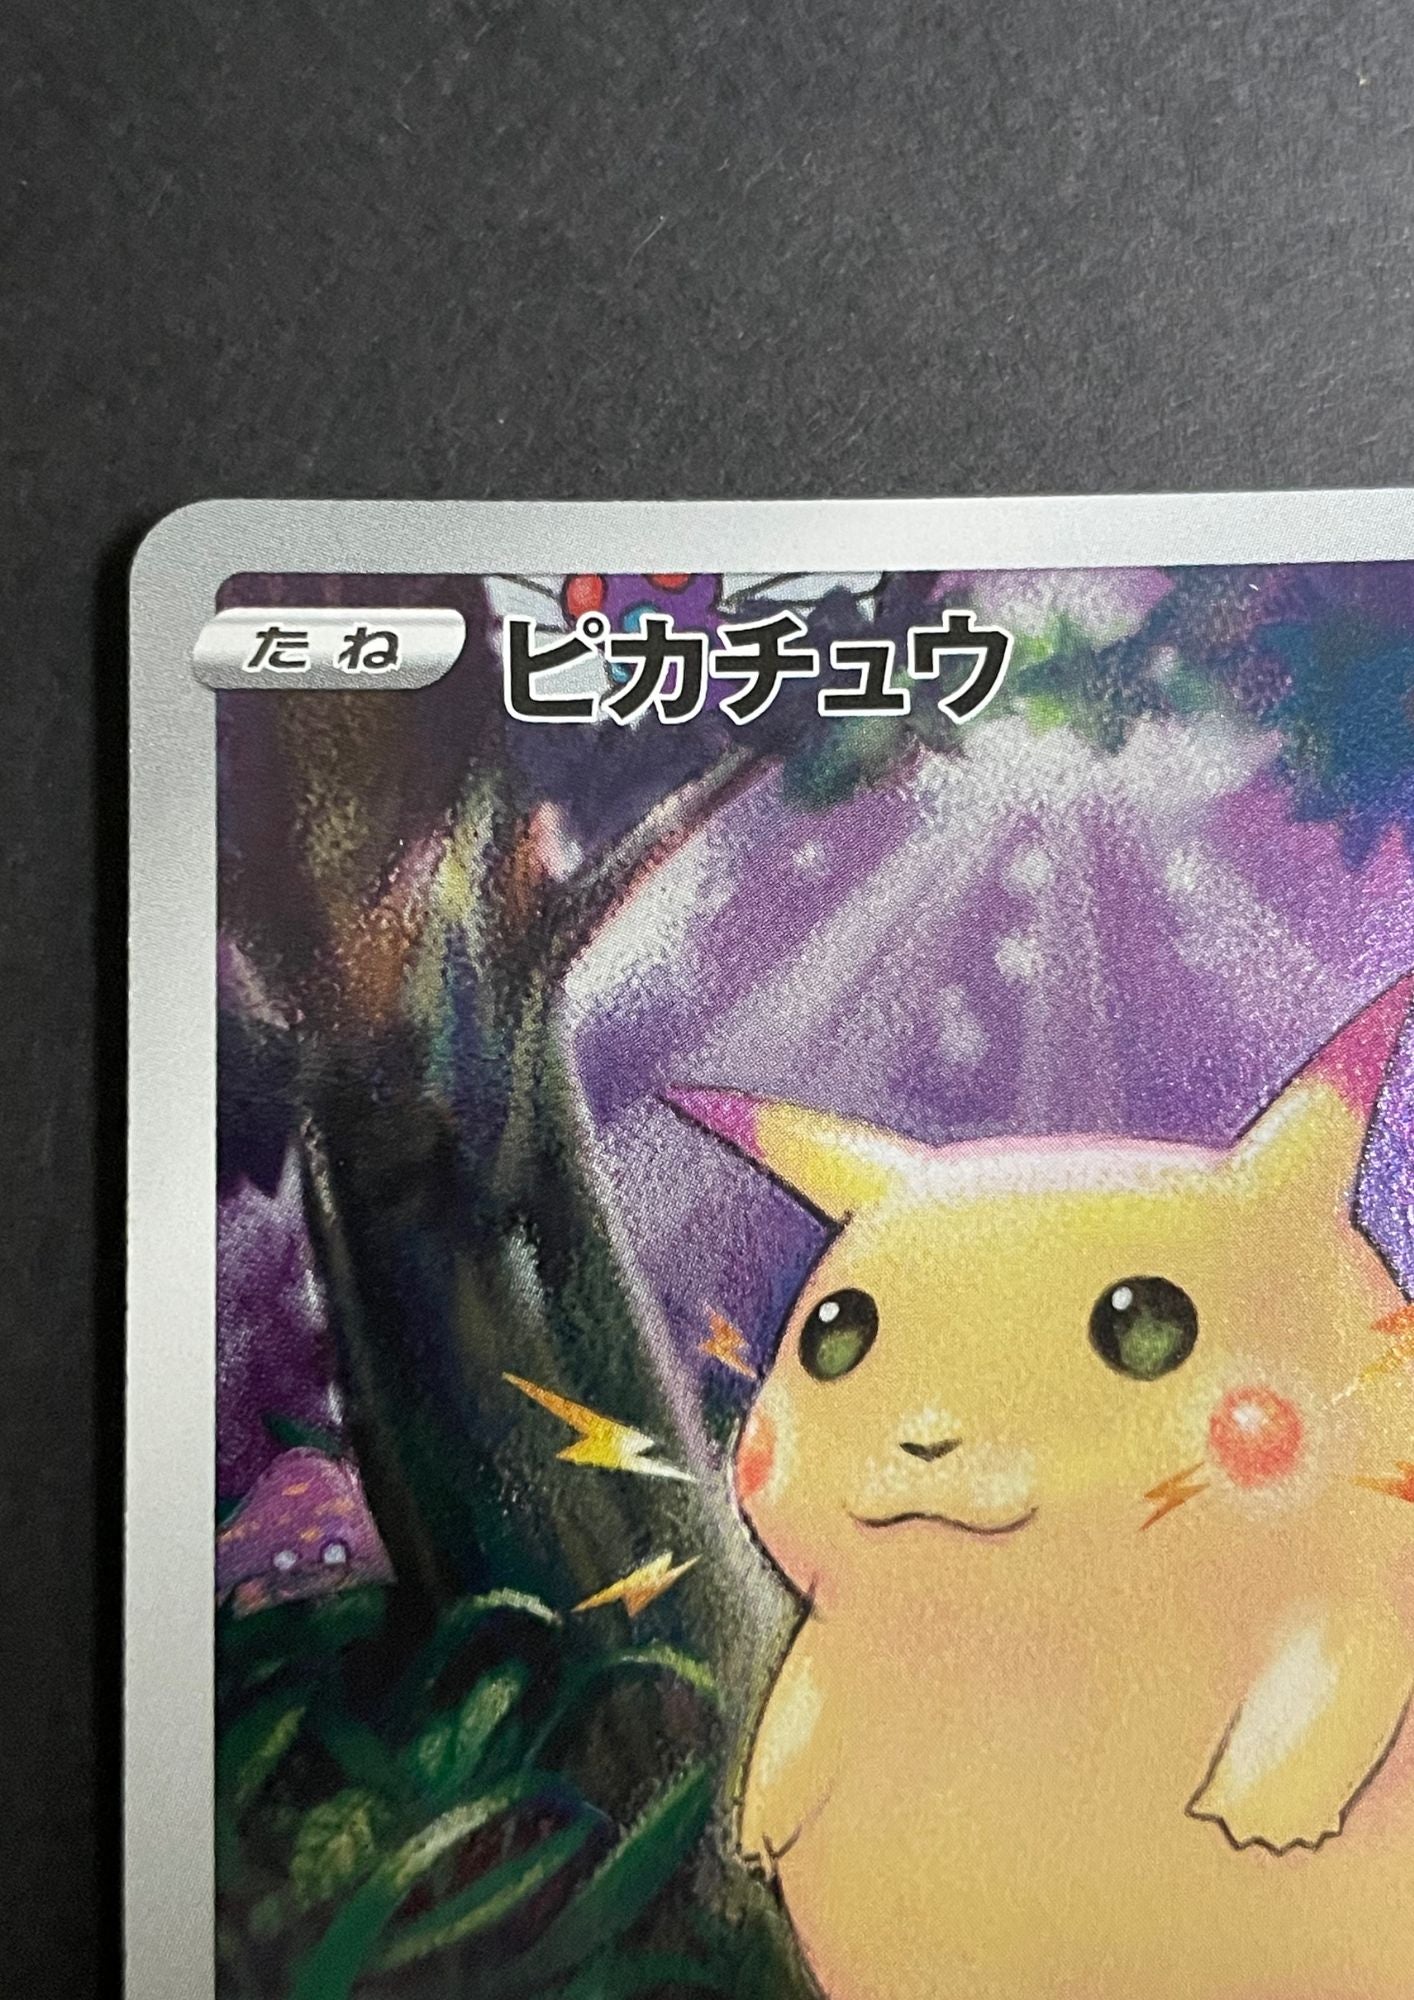 Pokemon card game [Sword & Shield] Pikachu [001/028] [S8a]